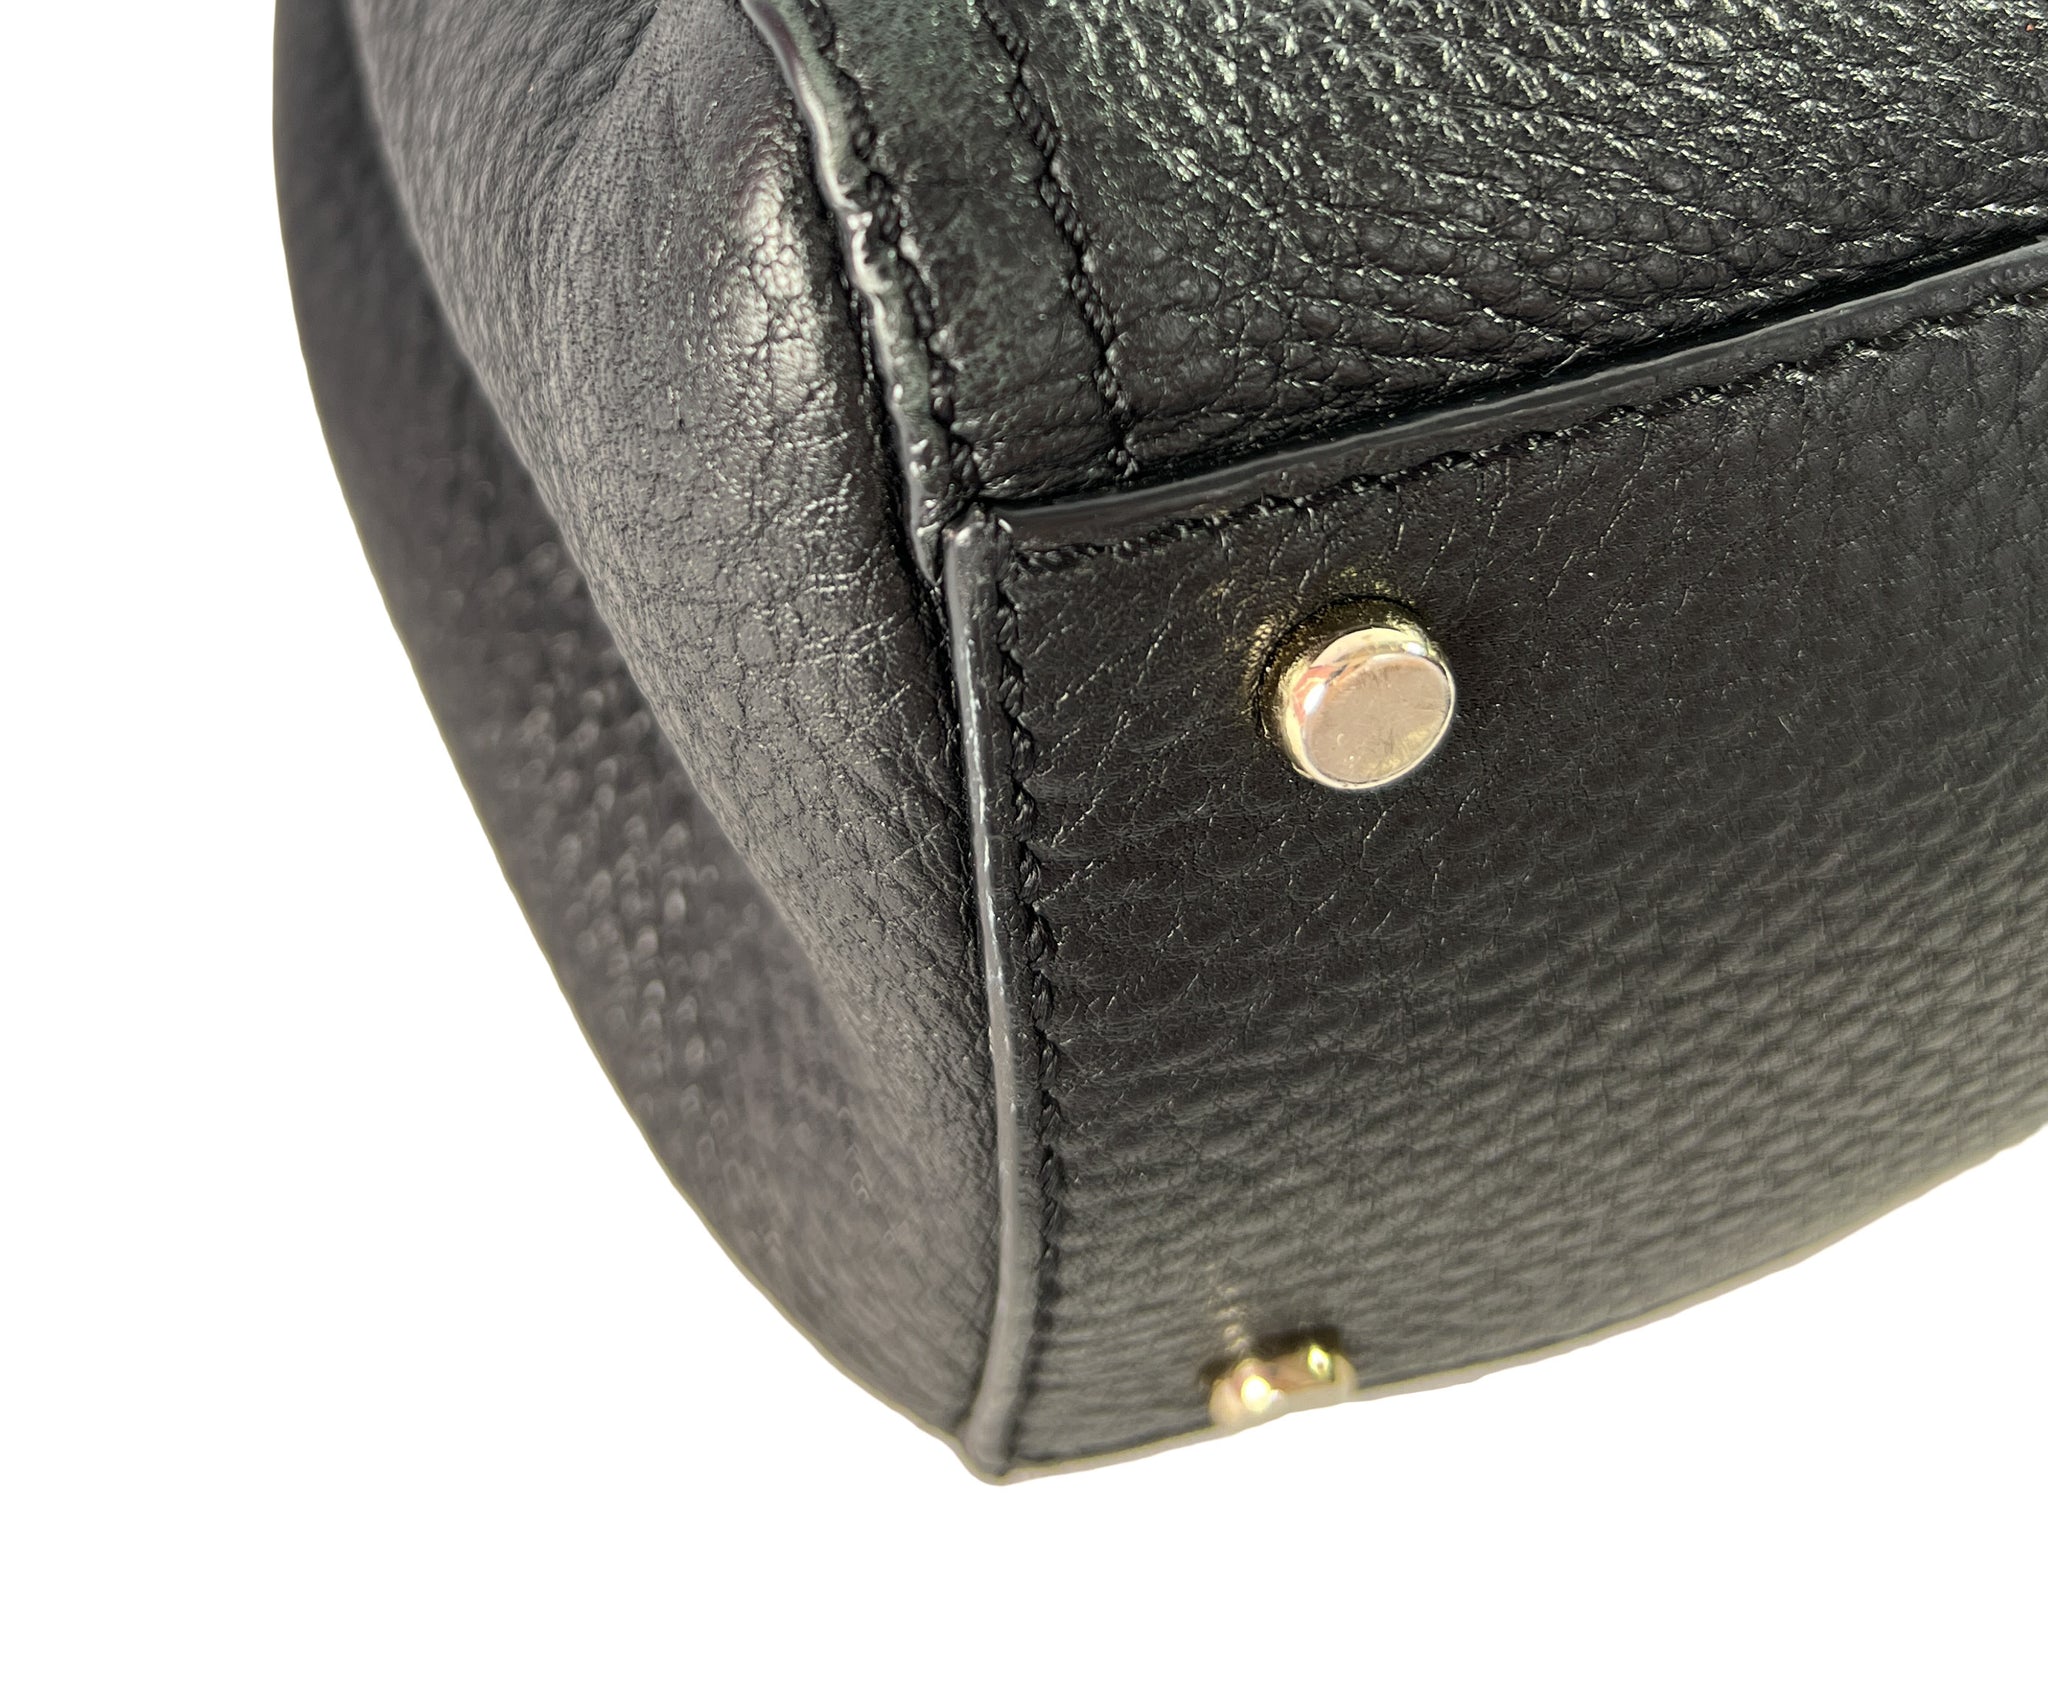 KATE SPADE Black Pebbled Leather Bag Fold Over Zip Closure Tassel Purse  Handbag